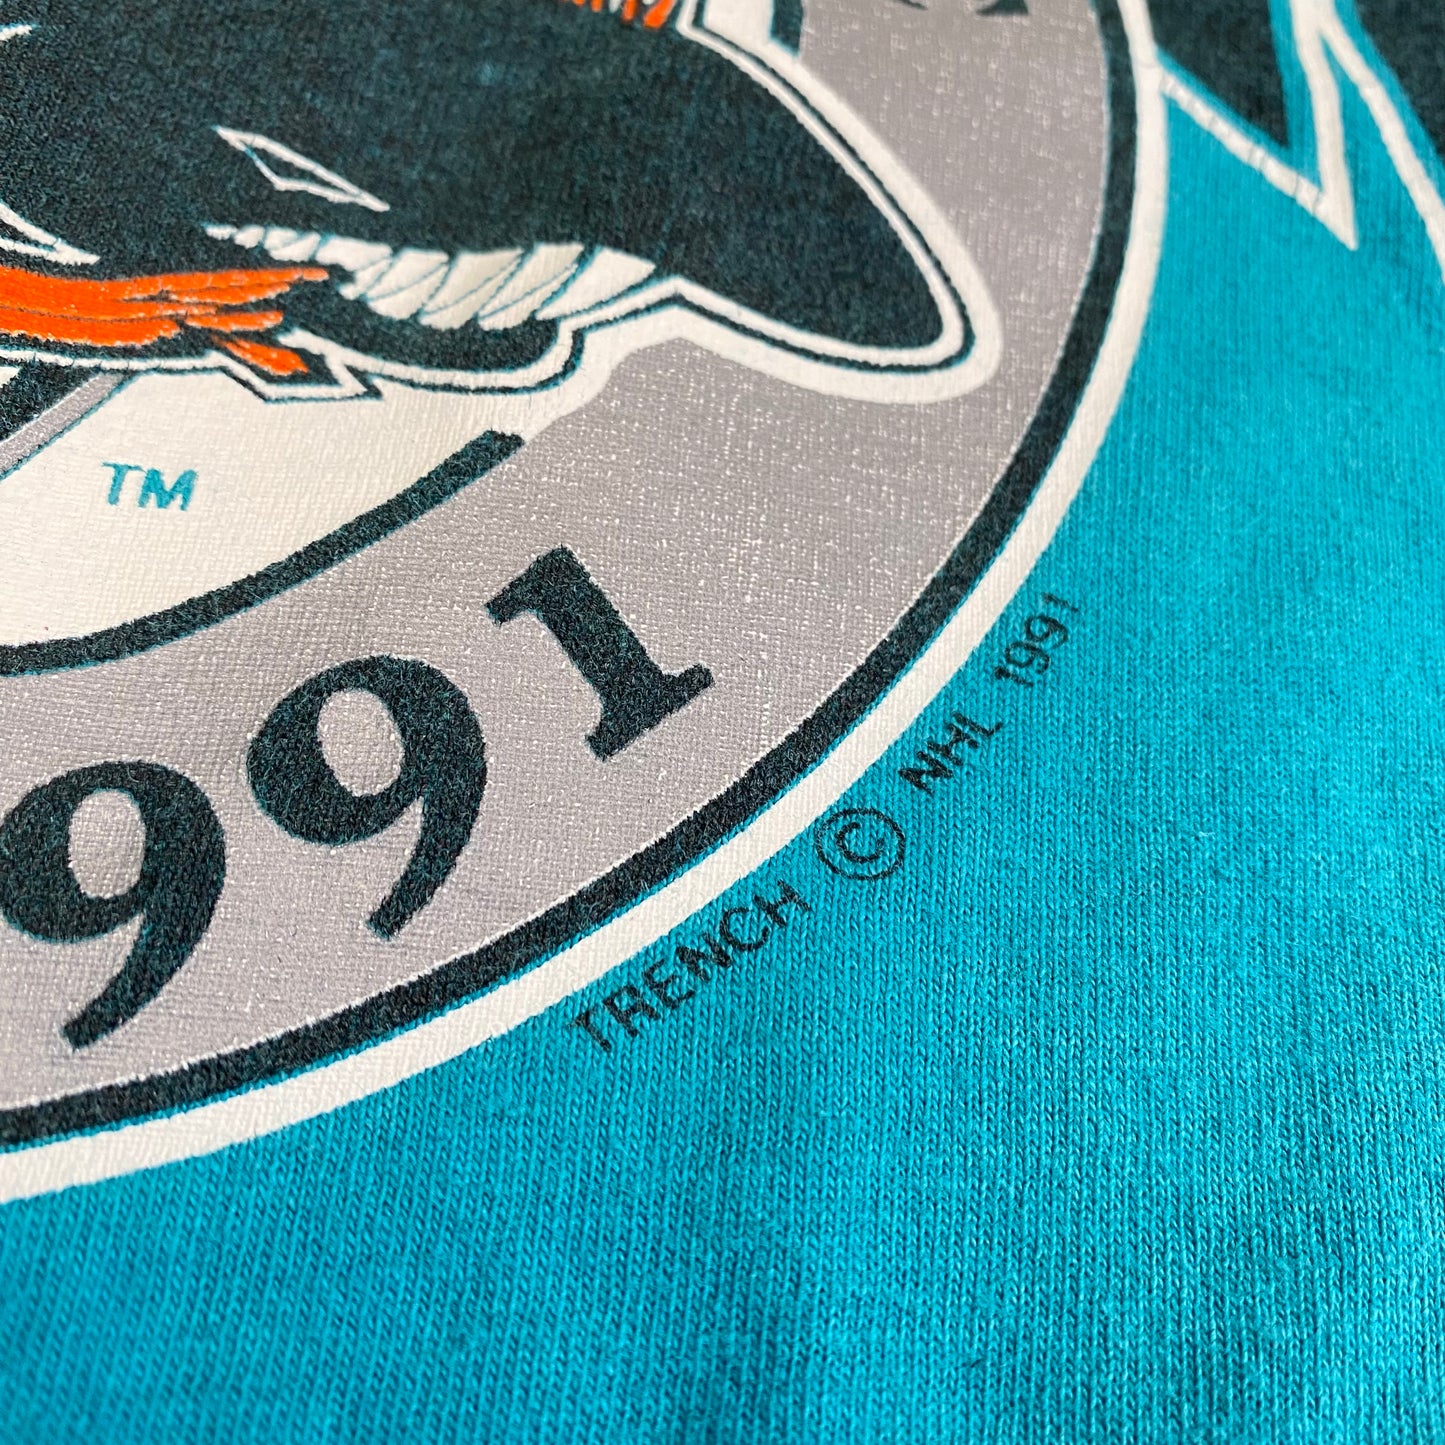 1991 San Jose Sharks Trench T-shirt Sz L (A1923)